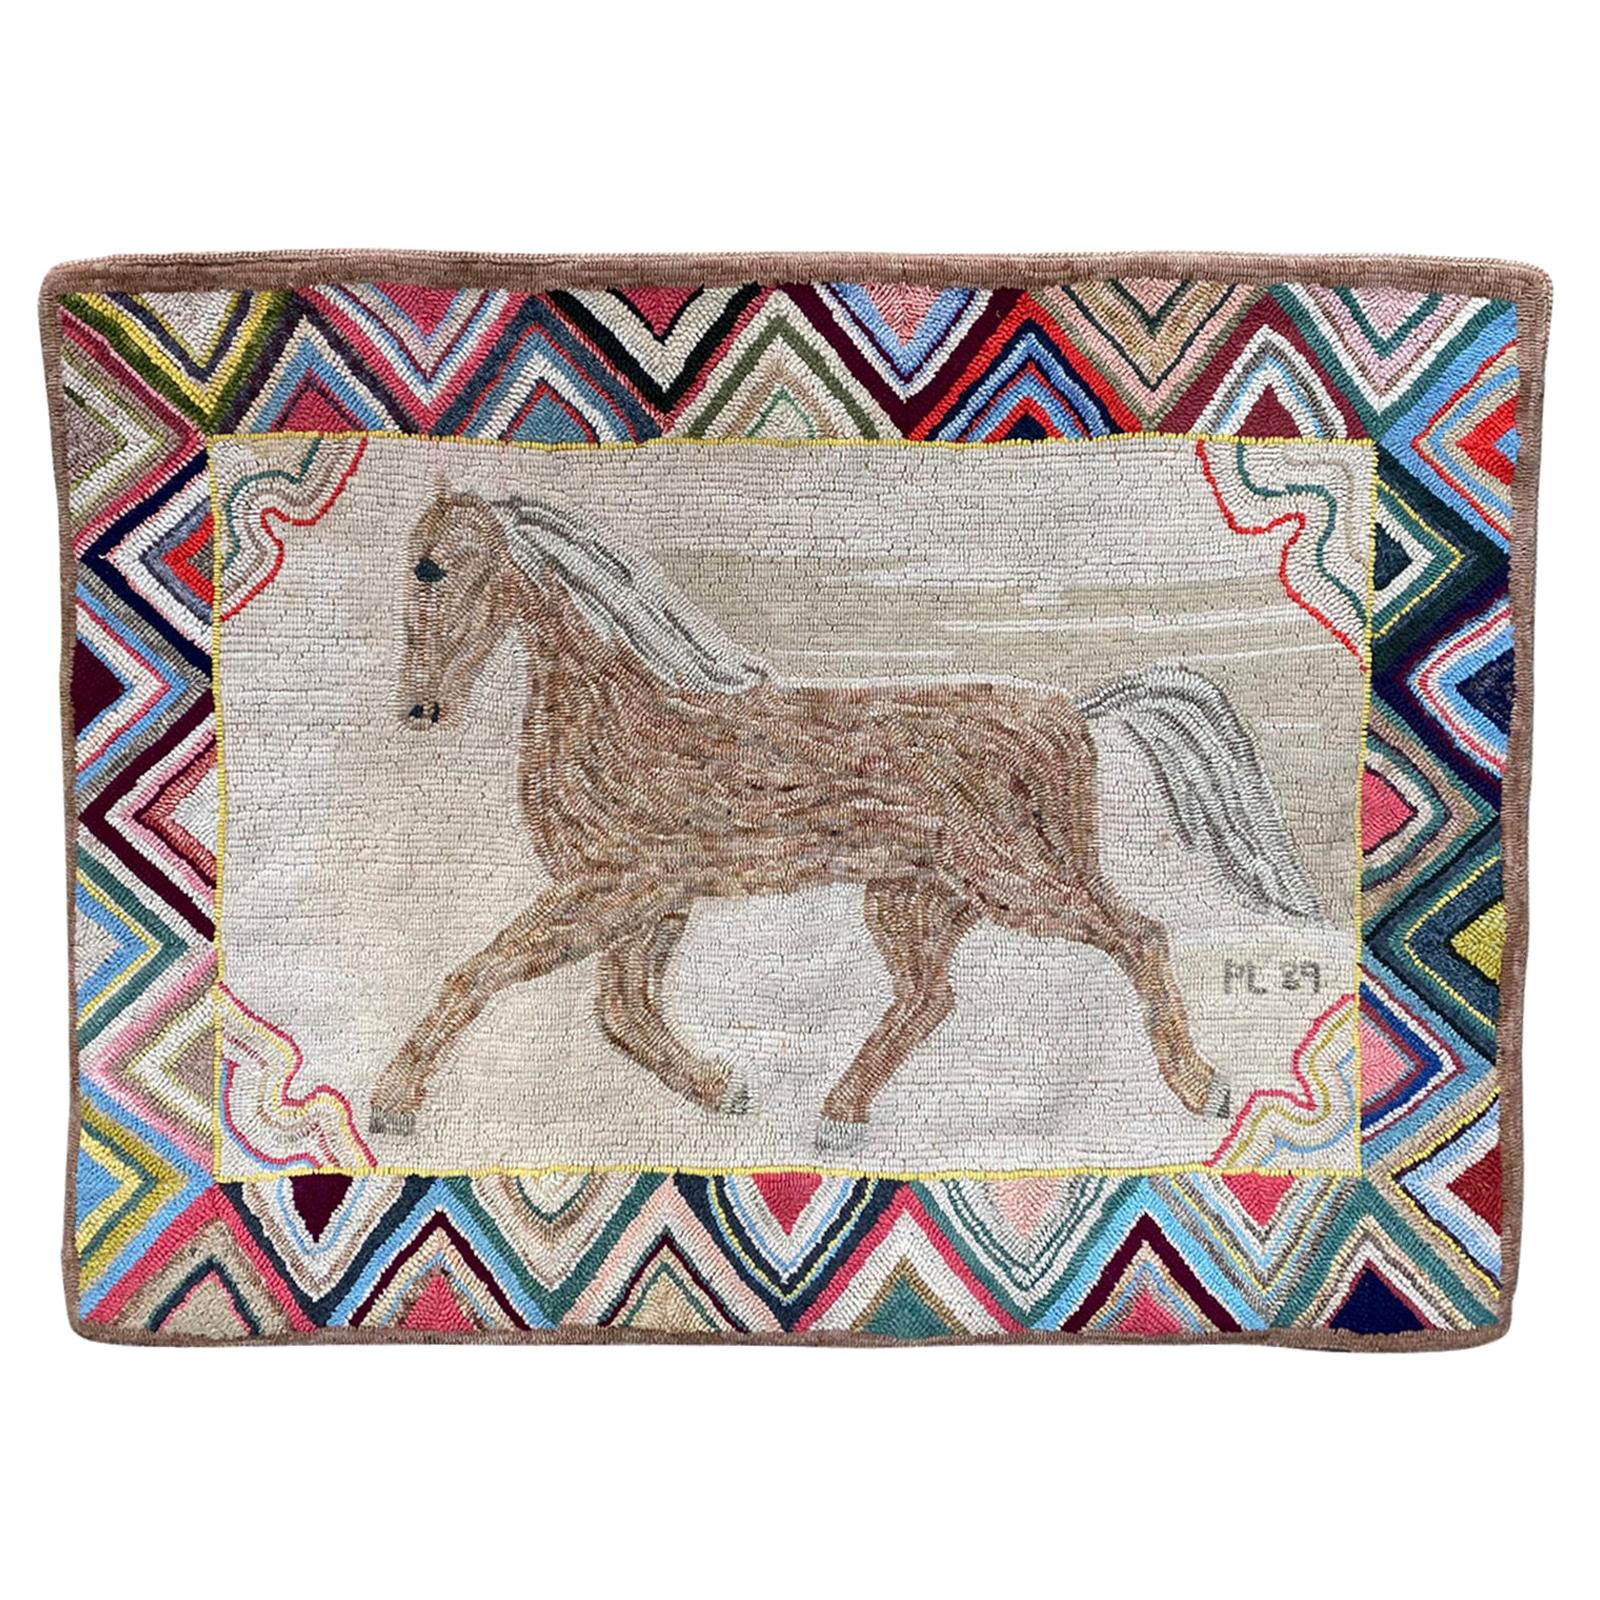 Framed Circa 1889 Folk Art Hook Rug Running Horse Art, Signed PL '89 For Sale